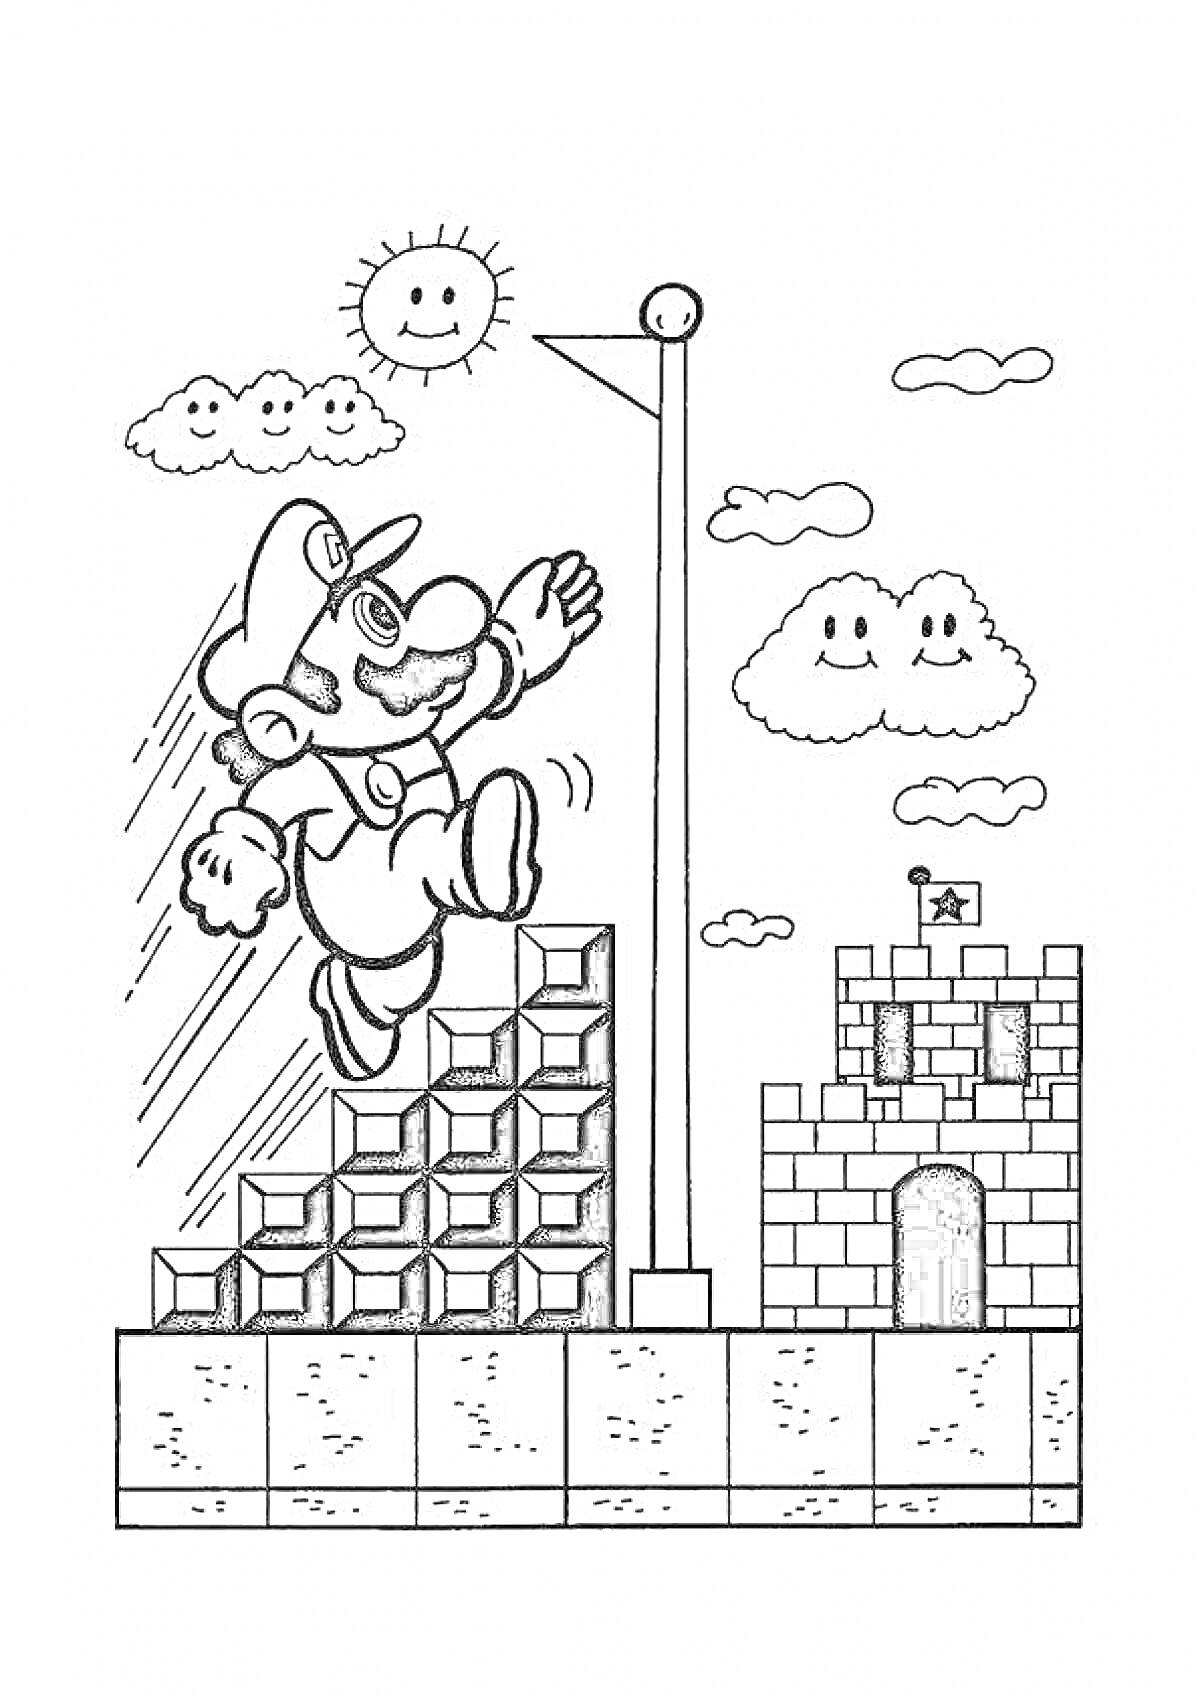 Раскраска Прыгающий персонаж по блокам, флагшток, замок, солнце, облака с лицами